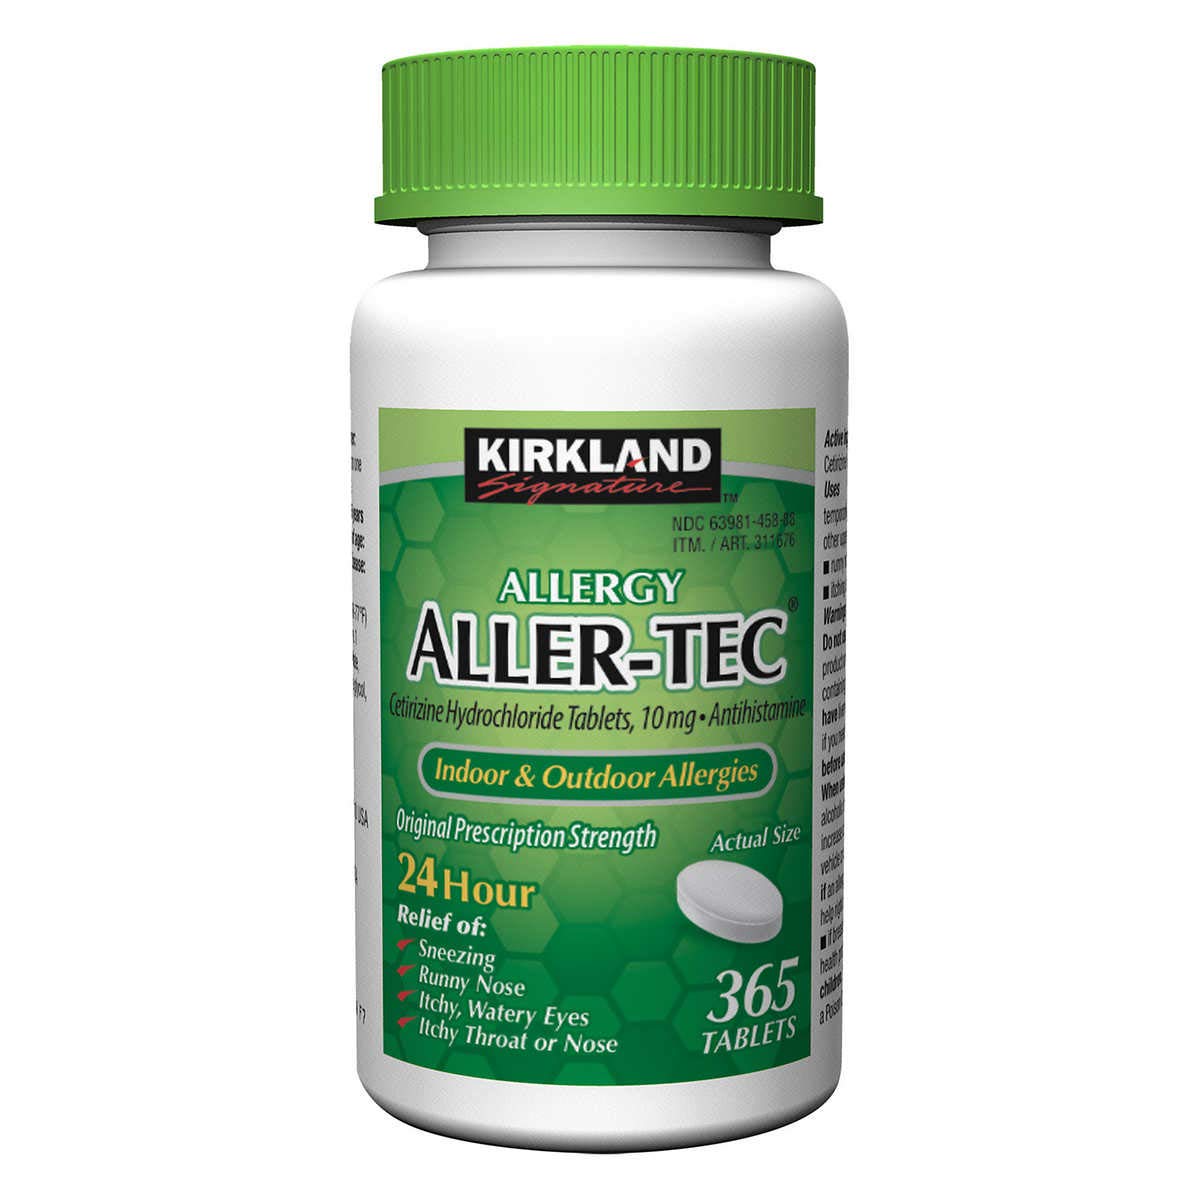 Kirkland Signature Aller-Tec Cetirizine HCL 10 mg/Antihistamine Tablets - 365 Tablets per Bottle